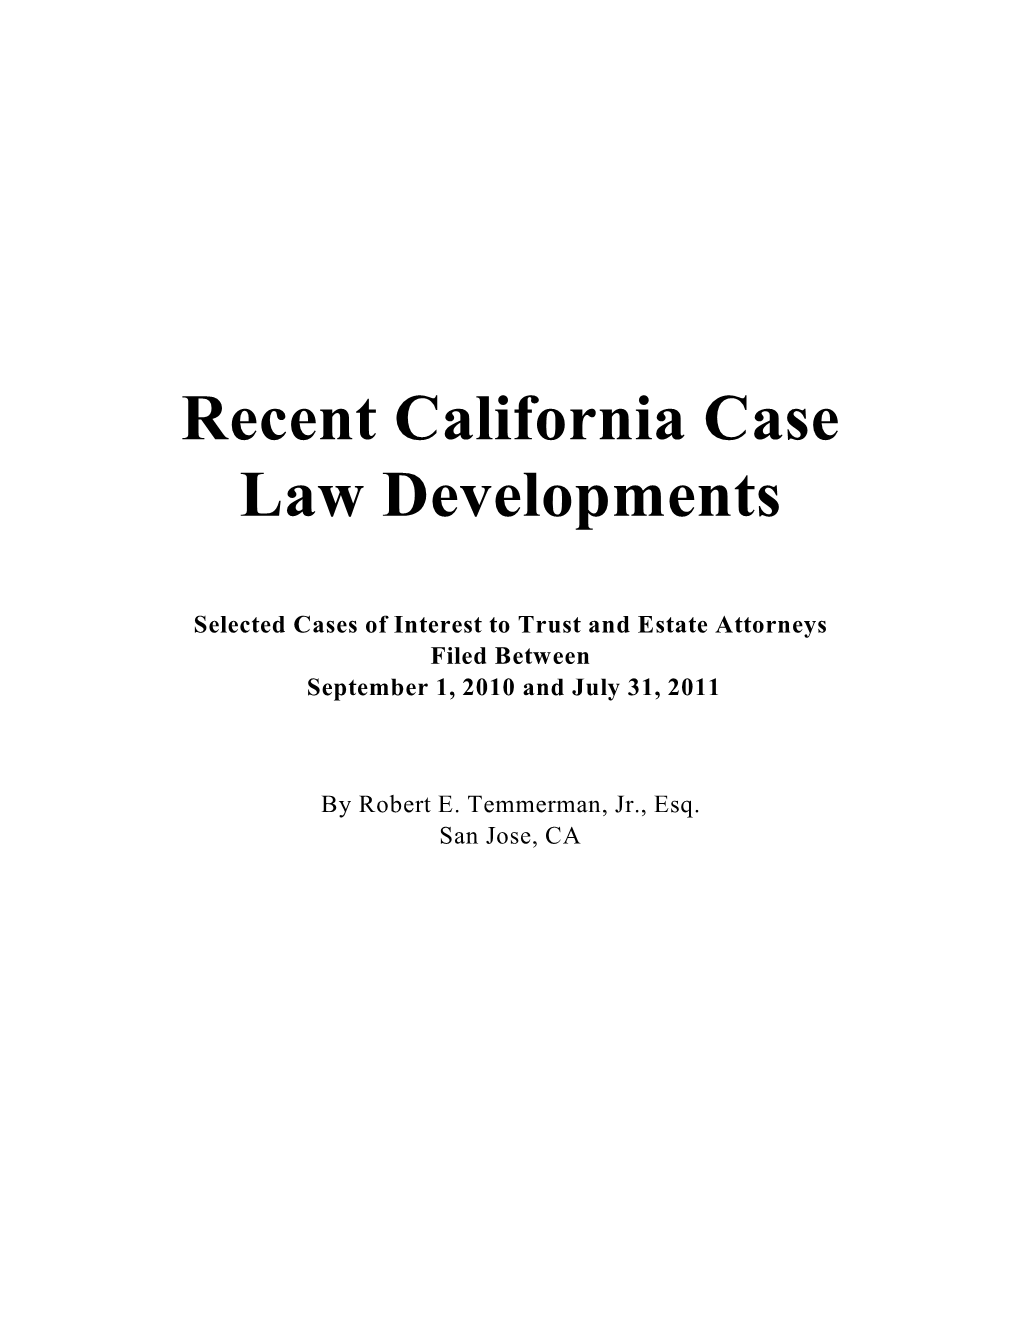 Recent California Case Law Developments